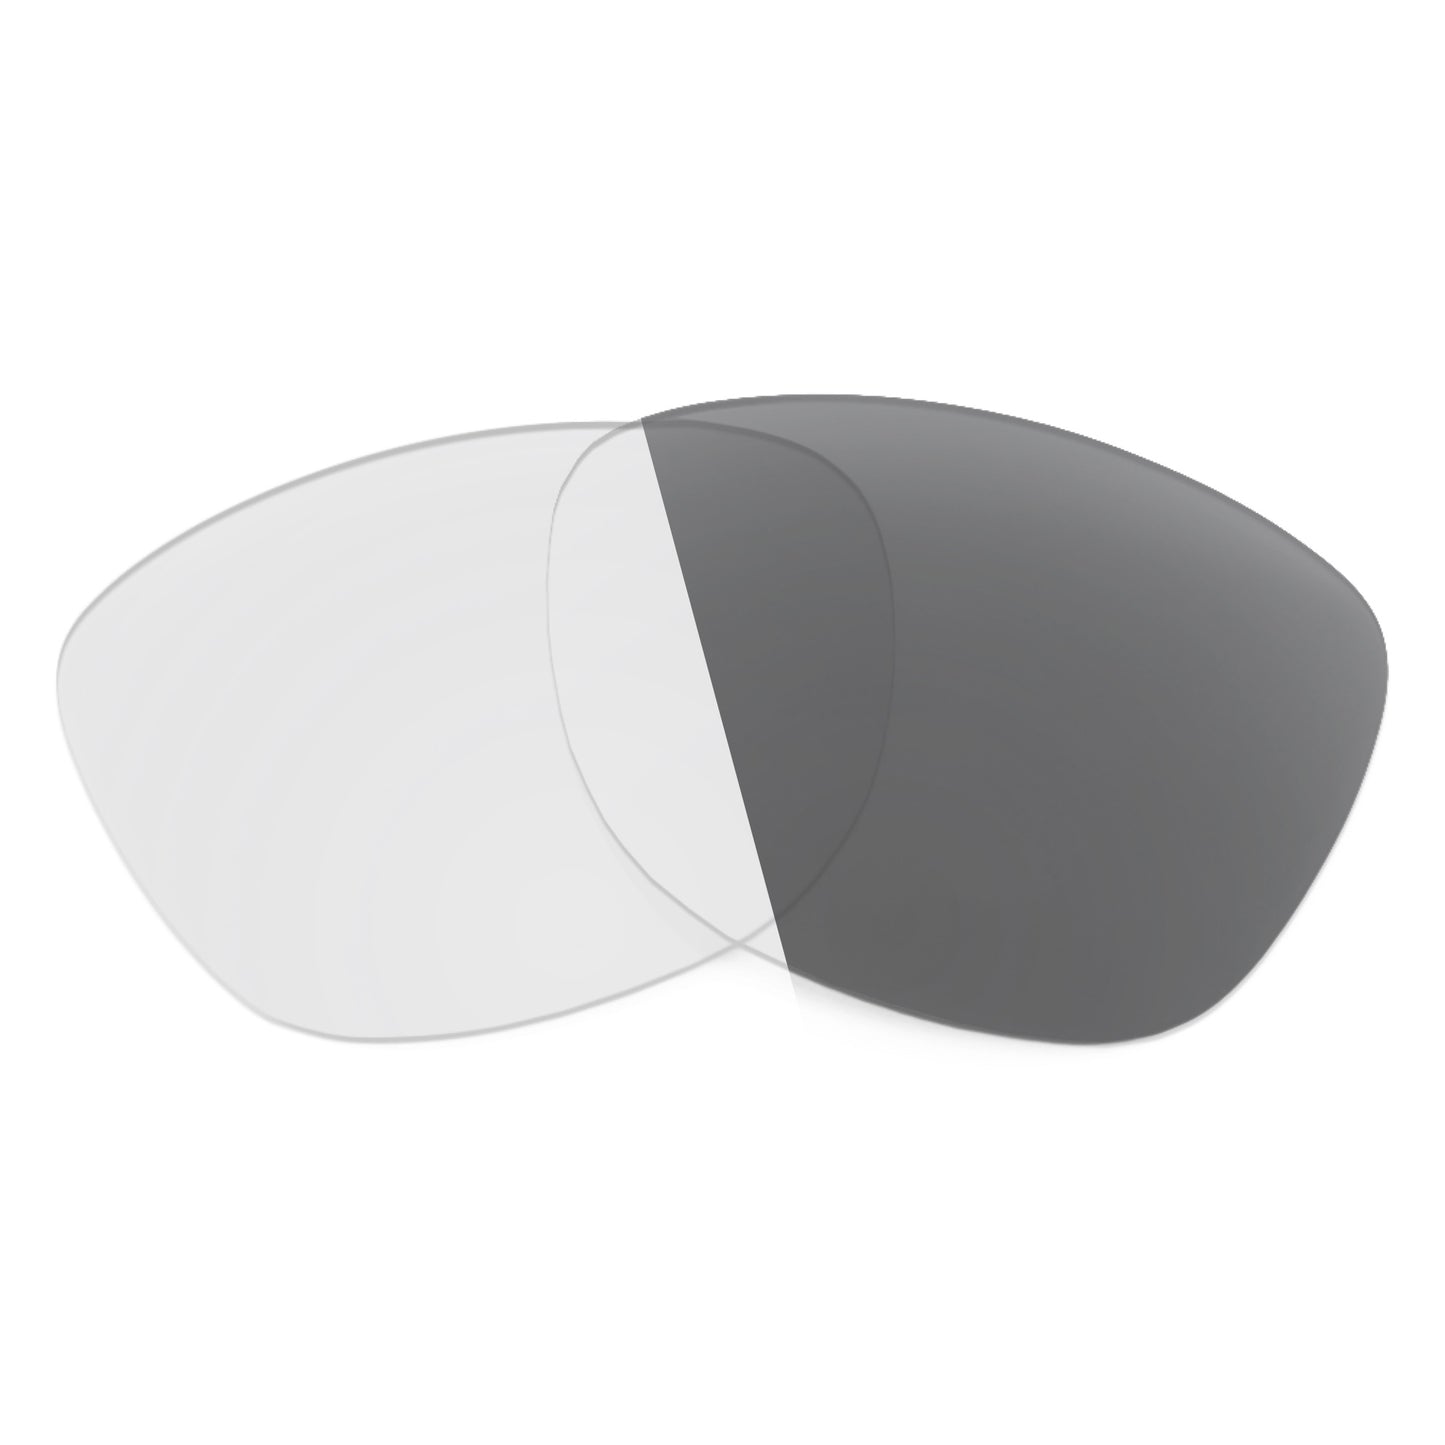 Revant replacement lenses for Maui Jim Lotus MJ827 Non-Polarized Adapt Gray Photochromic